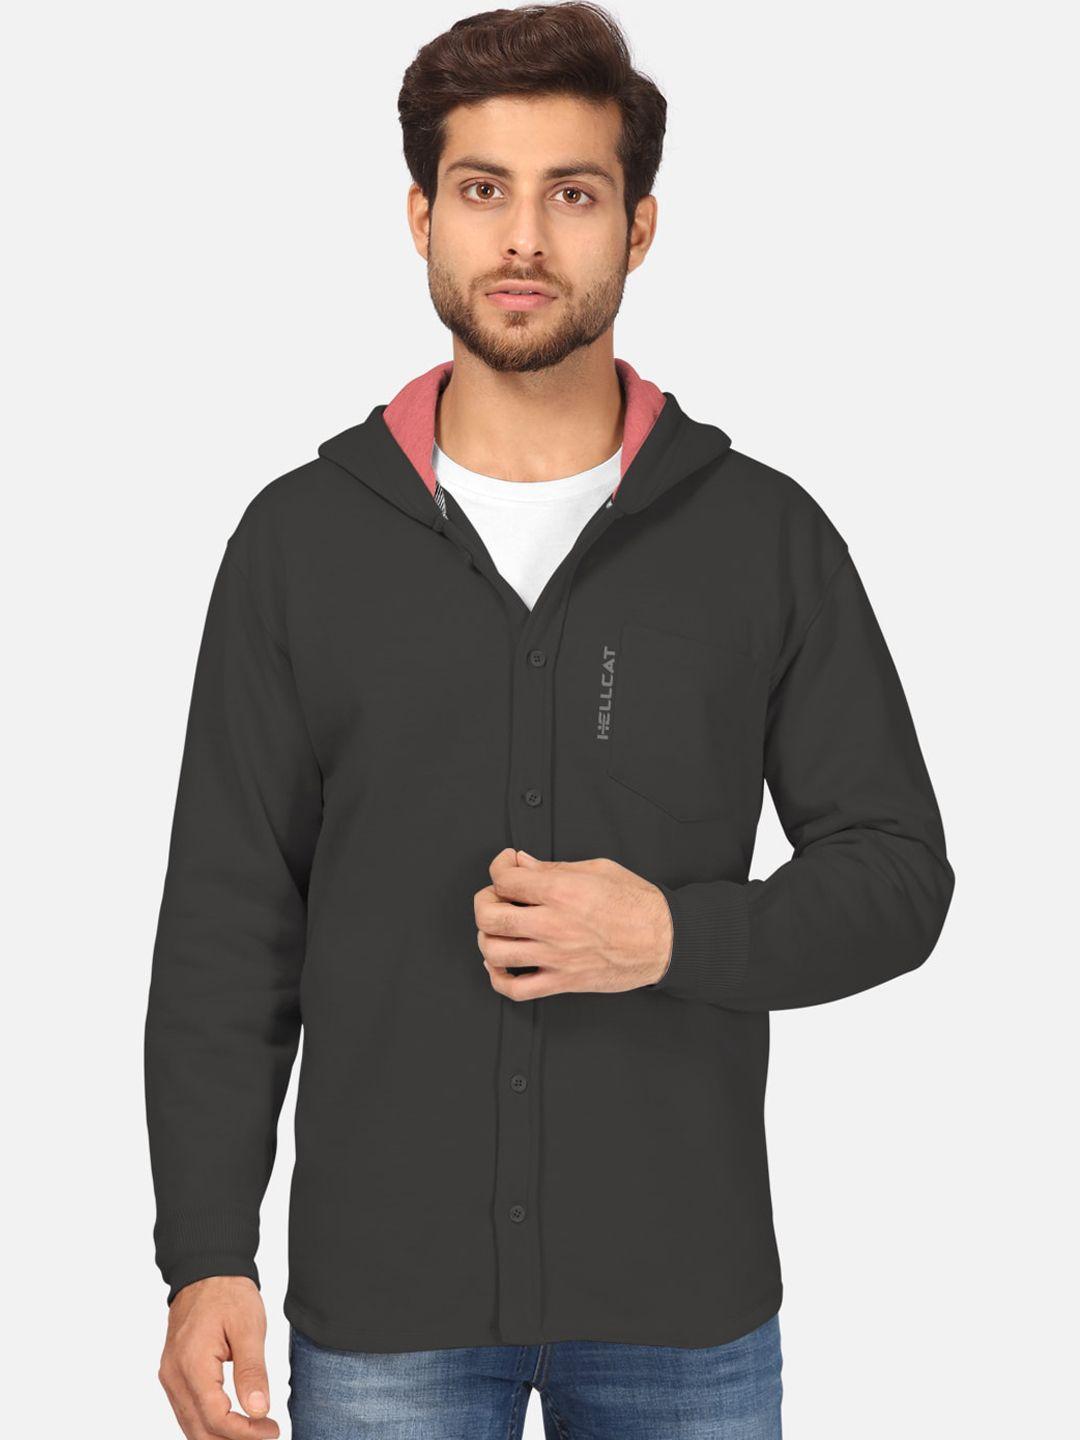 bullmer-men-charcoal-hooded-sweatshirt